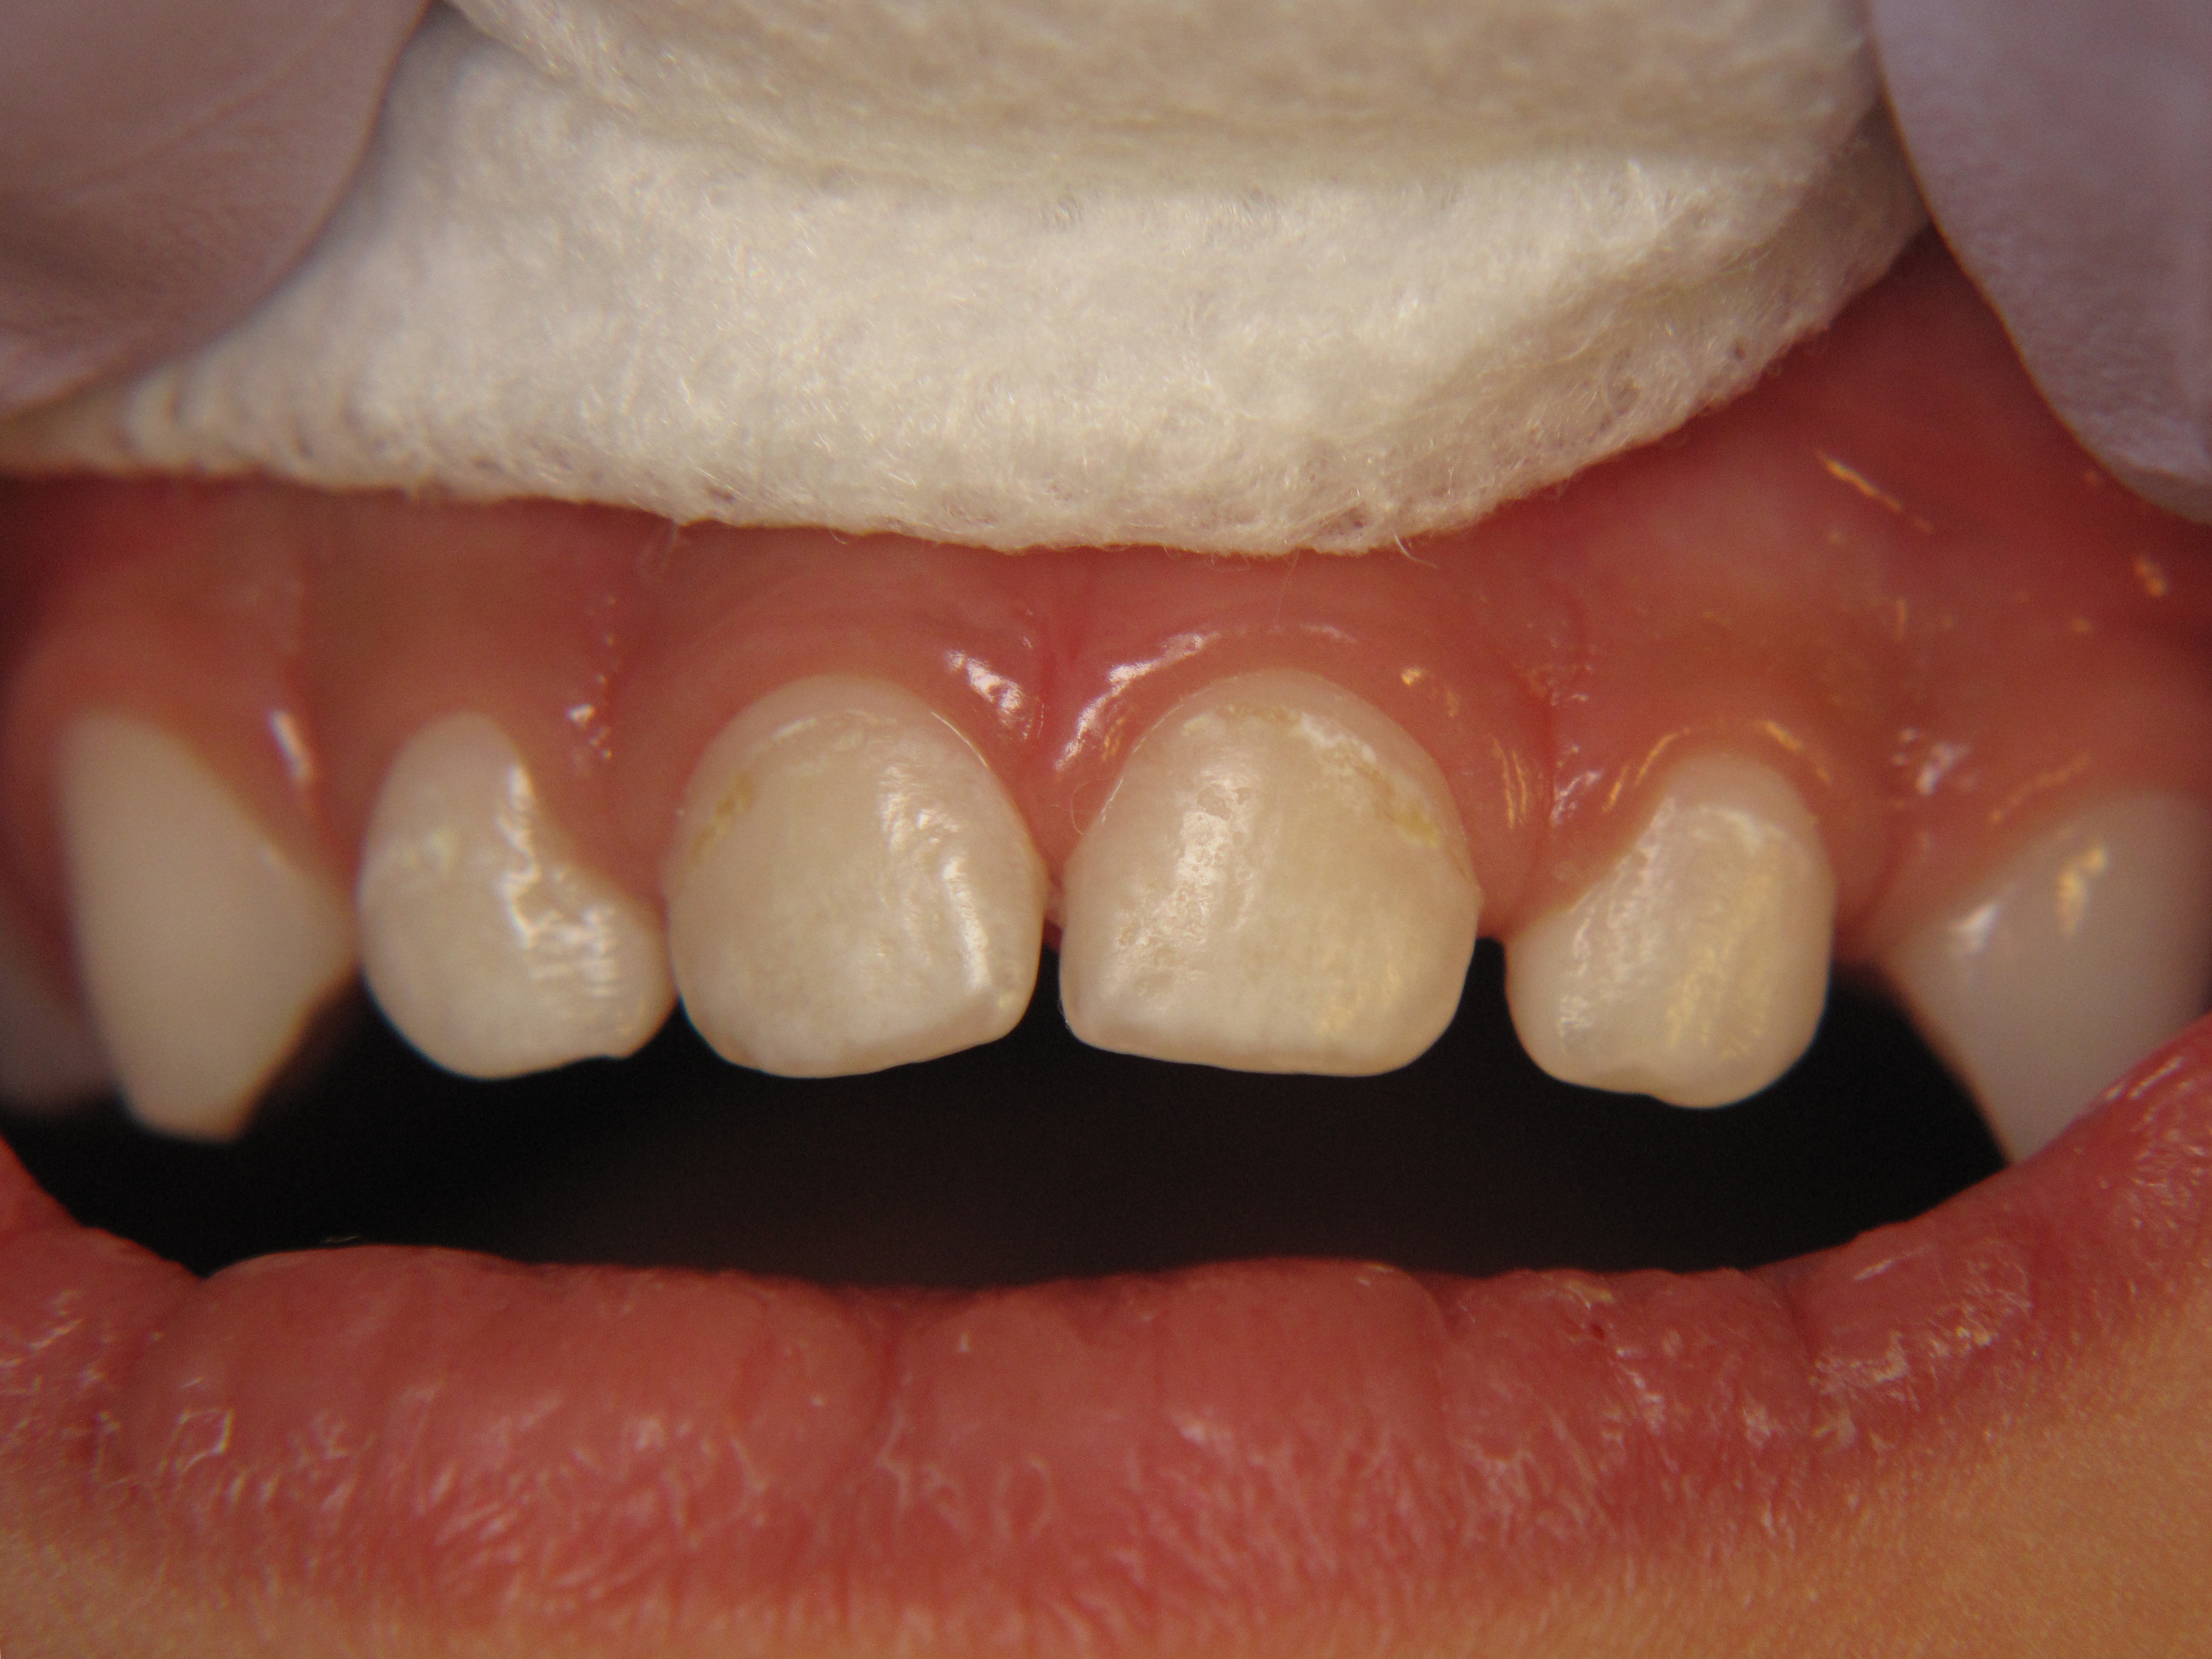 Figure 3. Mild dental disease